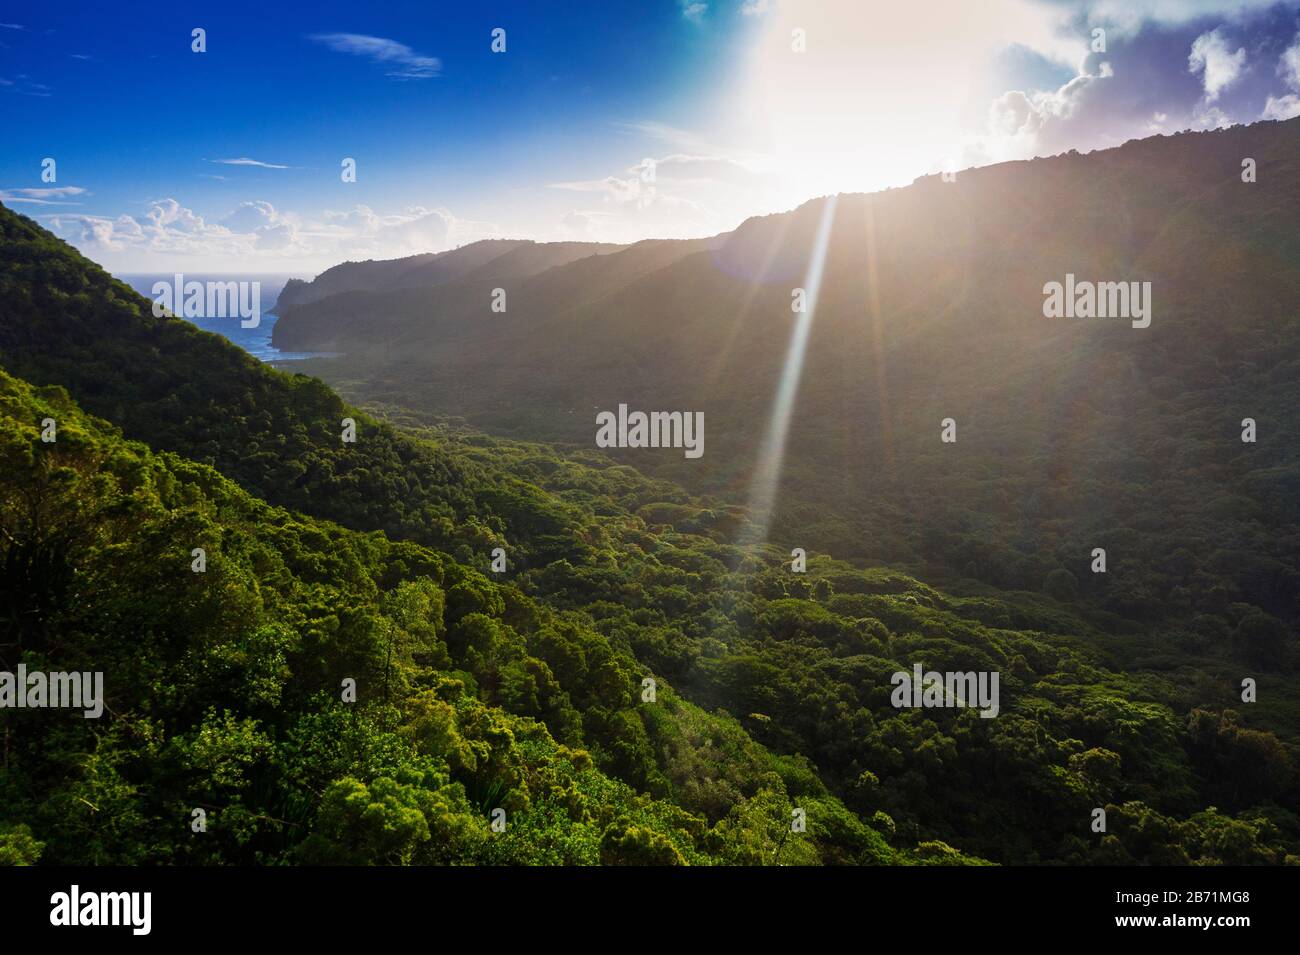 United States of America, Hawaii, Molokai island, aerial view of Halawa valley Stock Photo